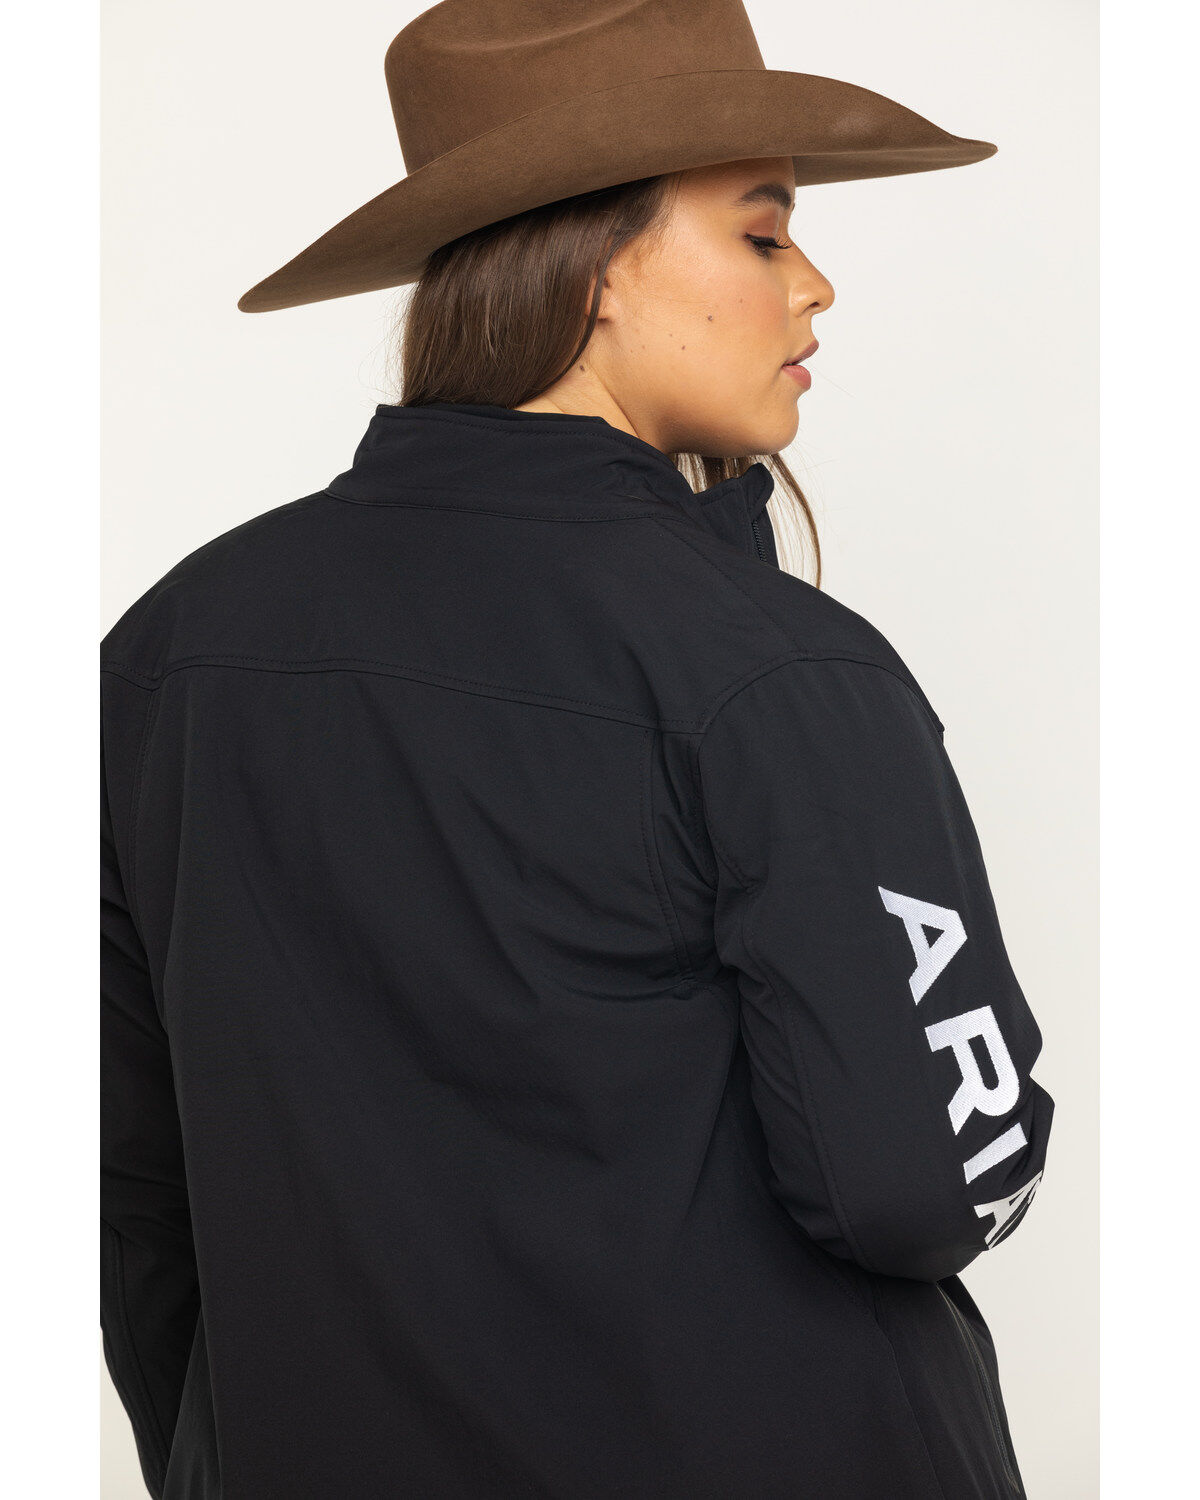 ariat jacket women's boot barn